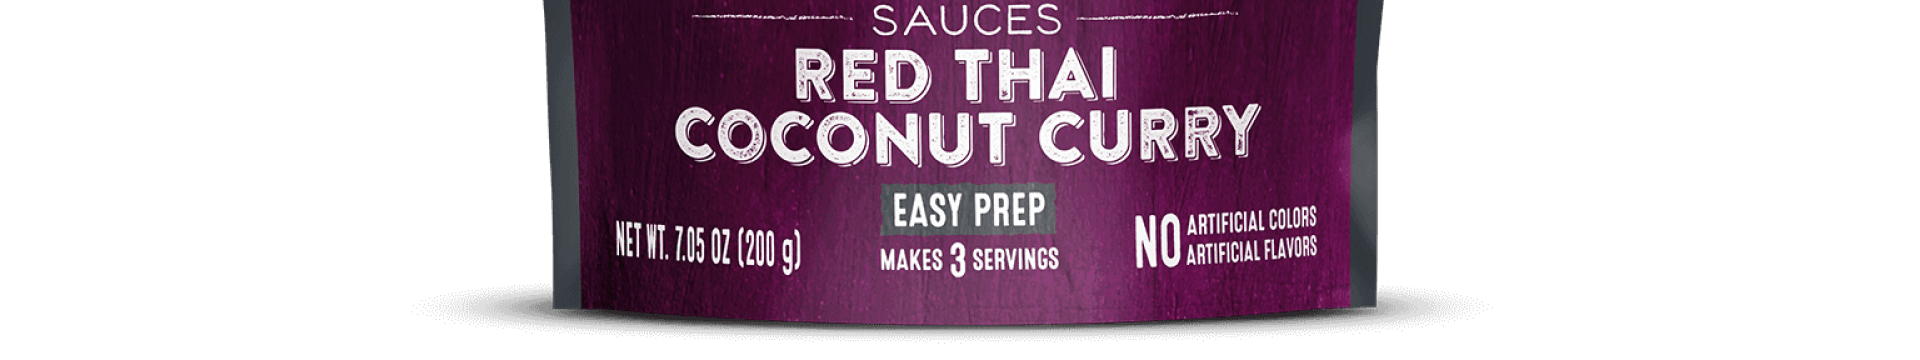 Orrington Farms Meal Creations Red Thai Coconut Curry Pouch Bottom